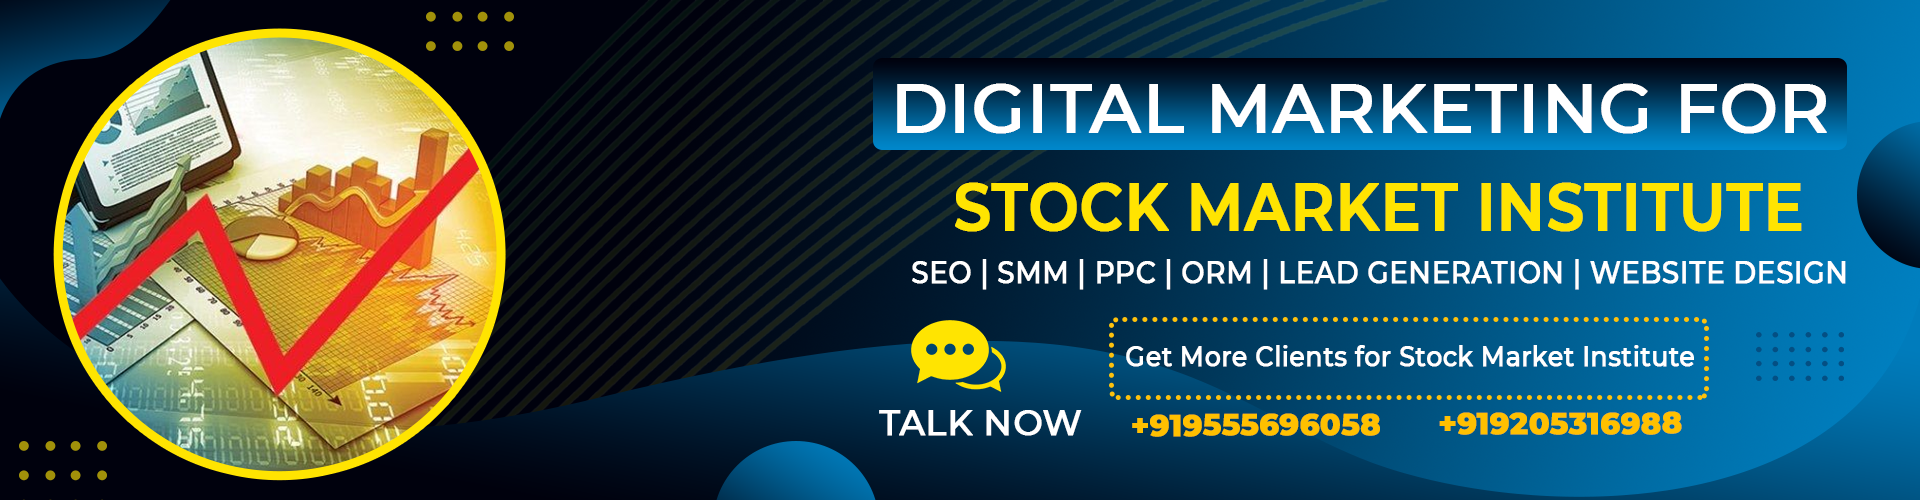 digital-marketing-for-stock-market-institute